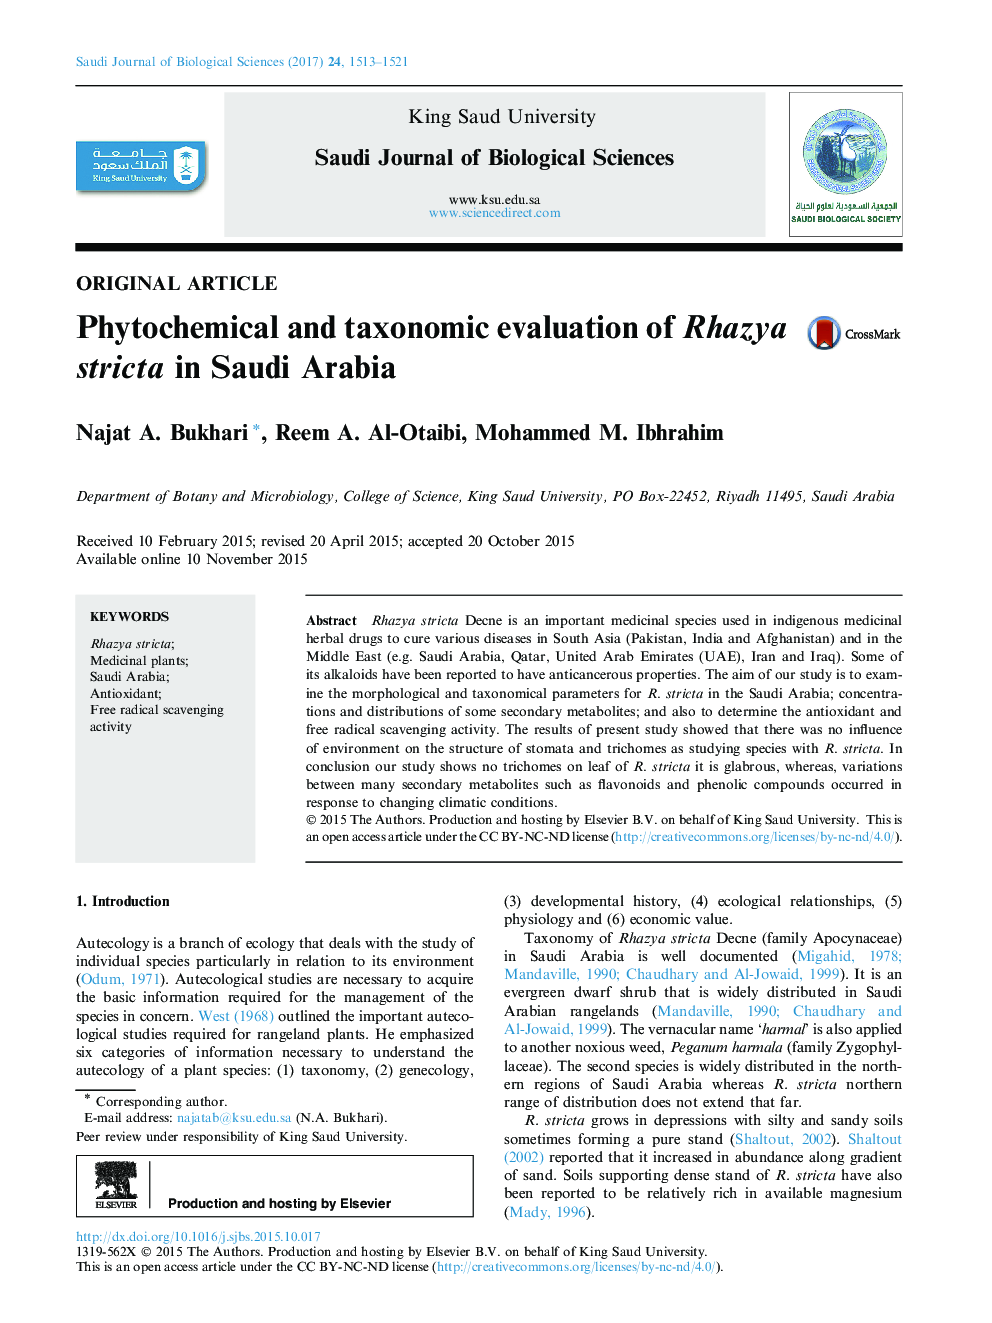 Original articlePhytochemical and taxonomic evaluation of Rhazya stricta in Saudi Arabia